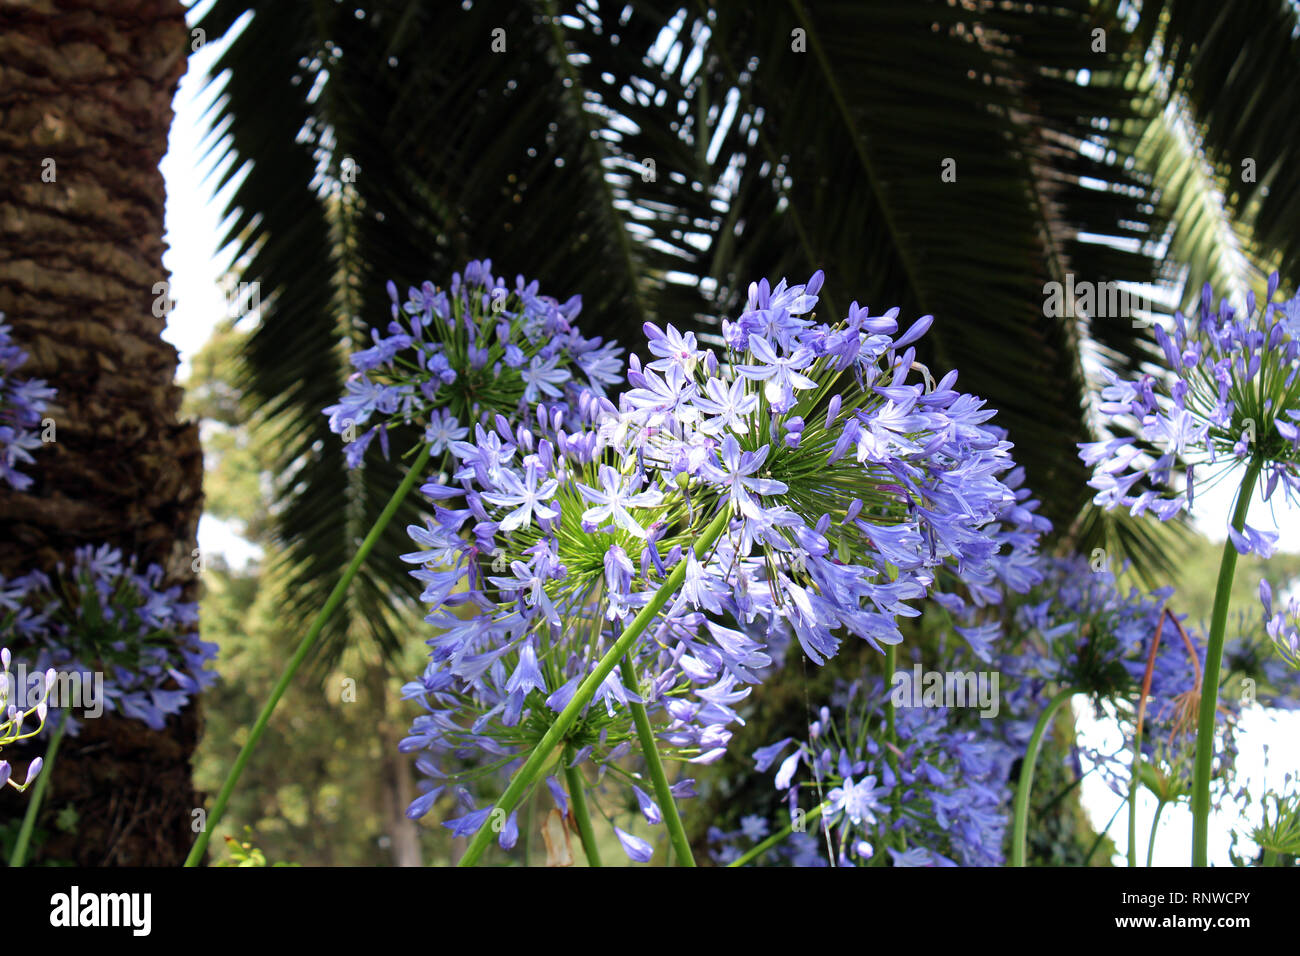 A group of True Blue Allium flowersin full bloom Stock Photo